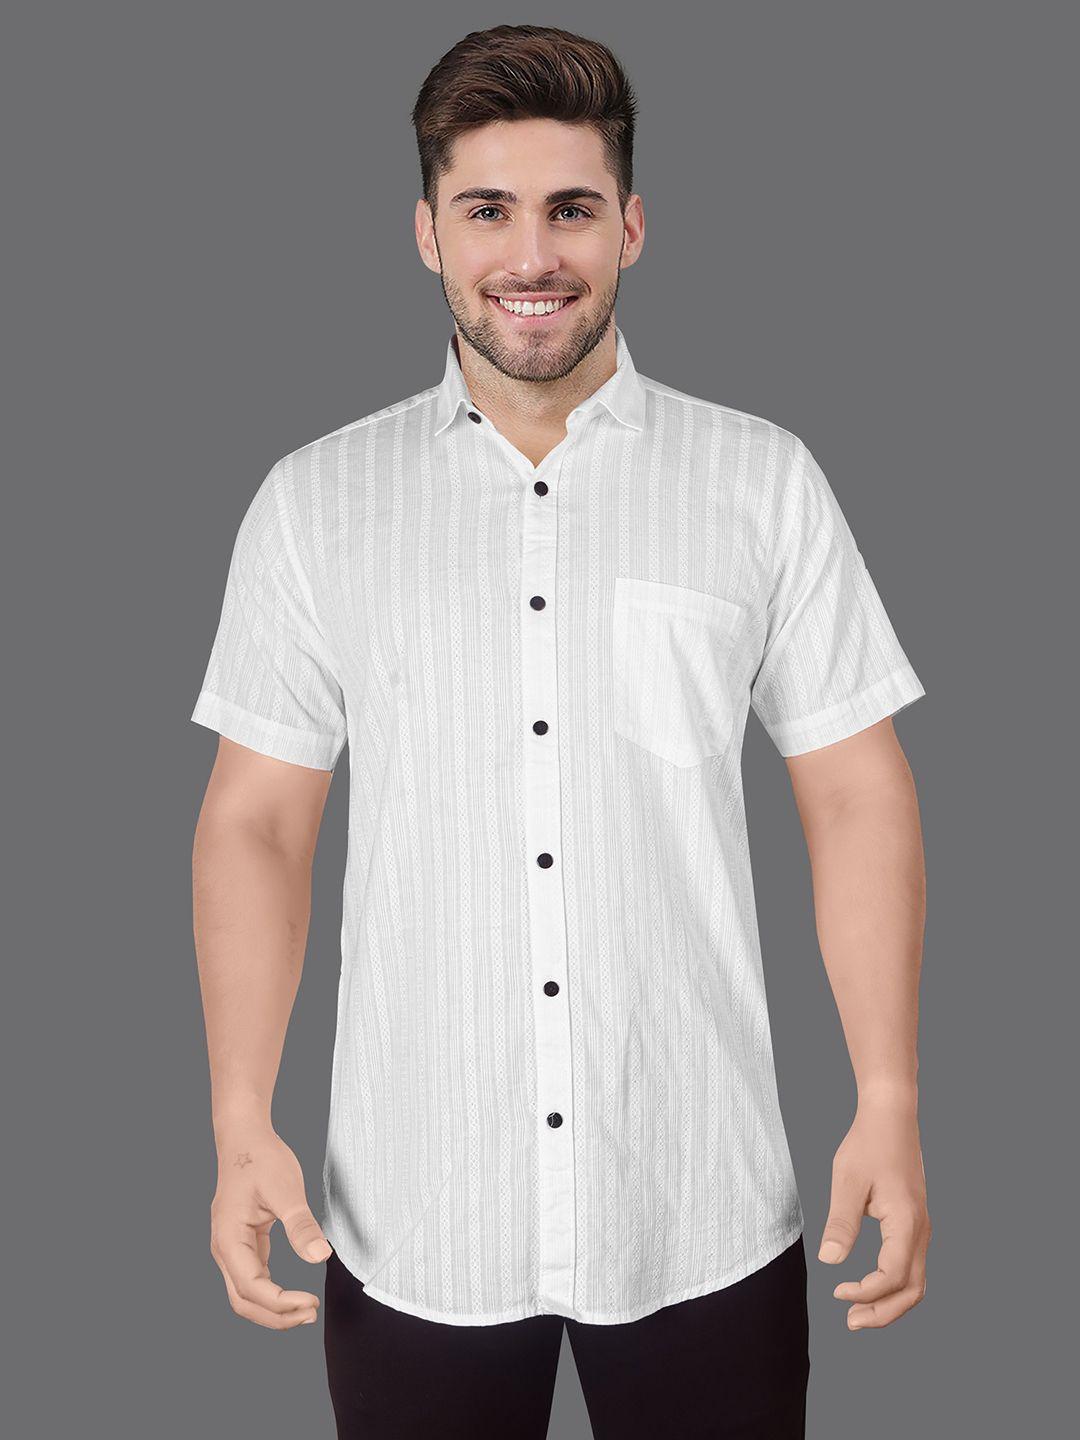 jb just black premium slim fit striped spread collar short sleeves cotton casual shirt